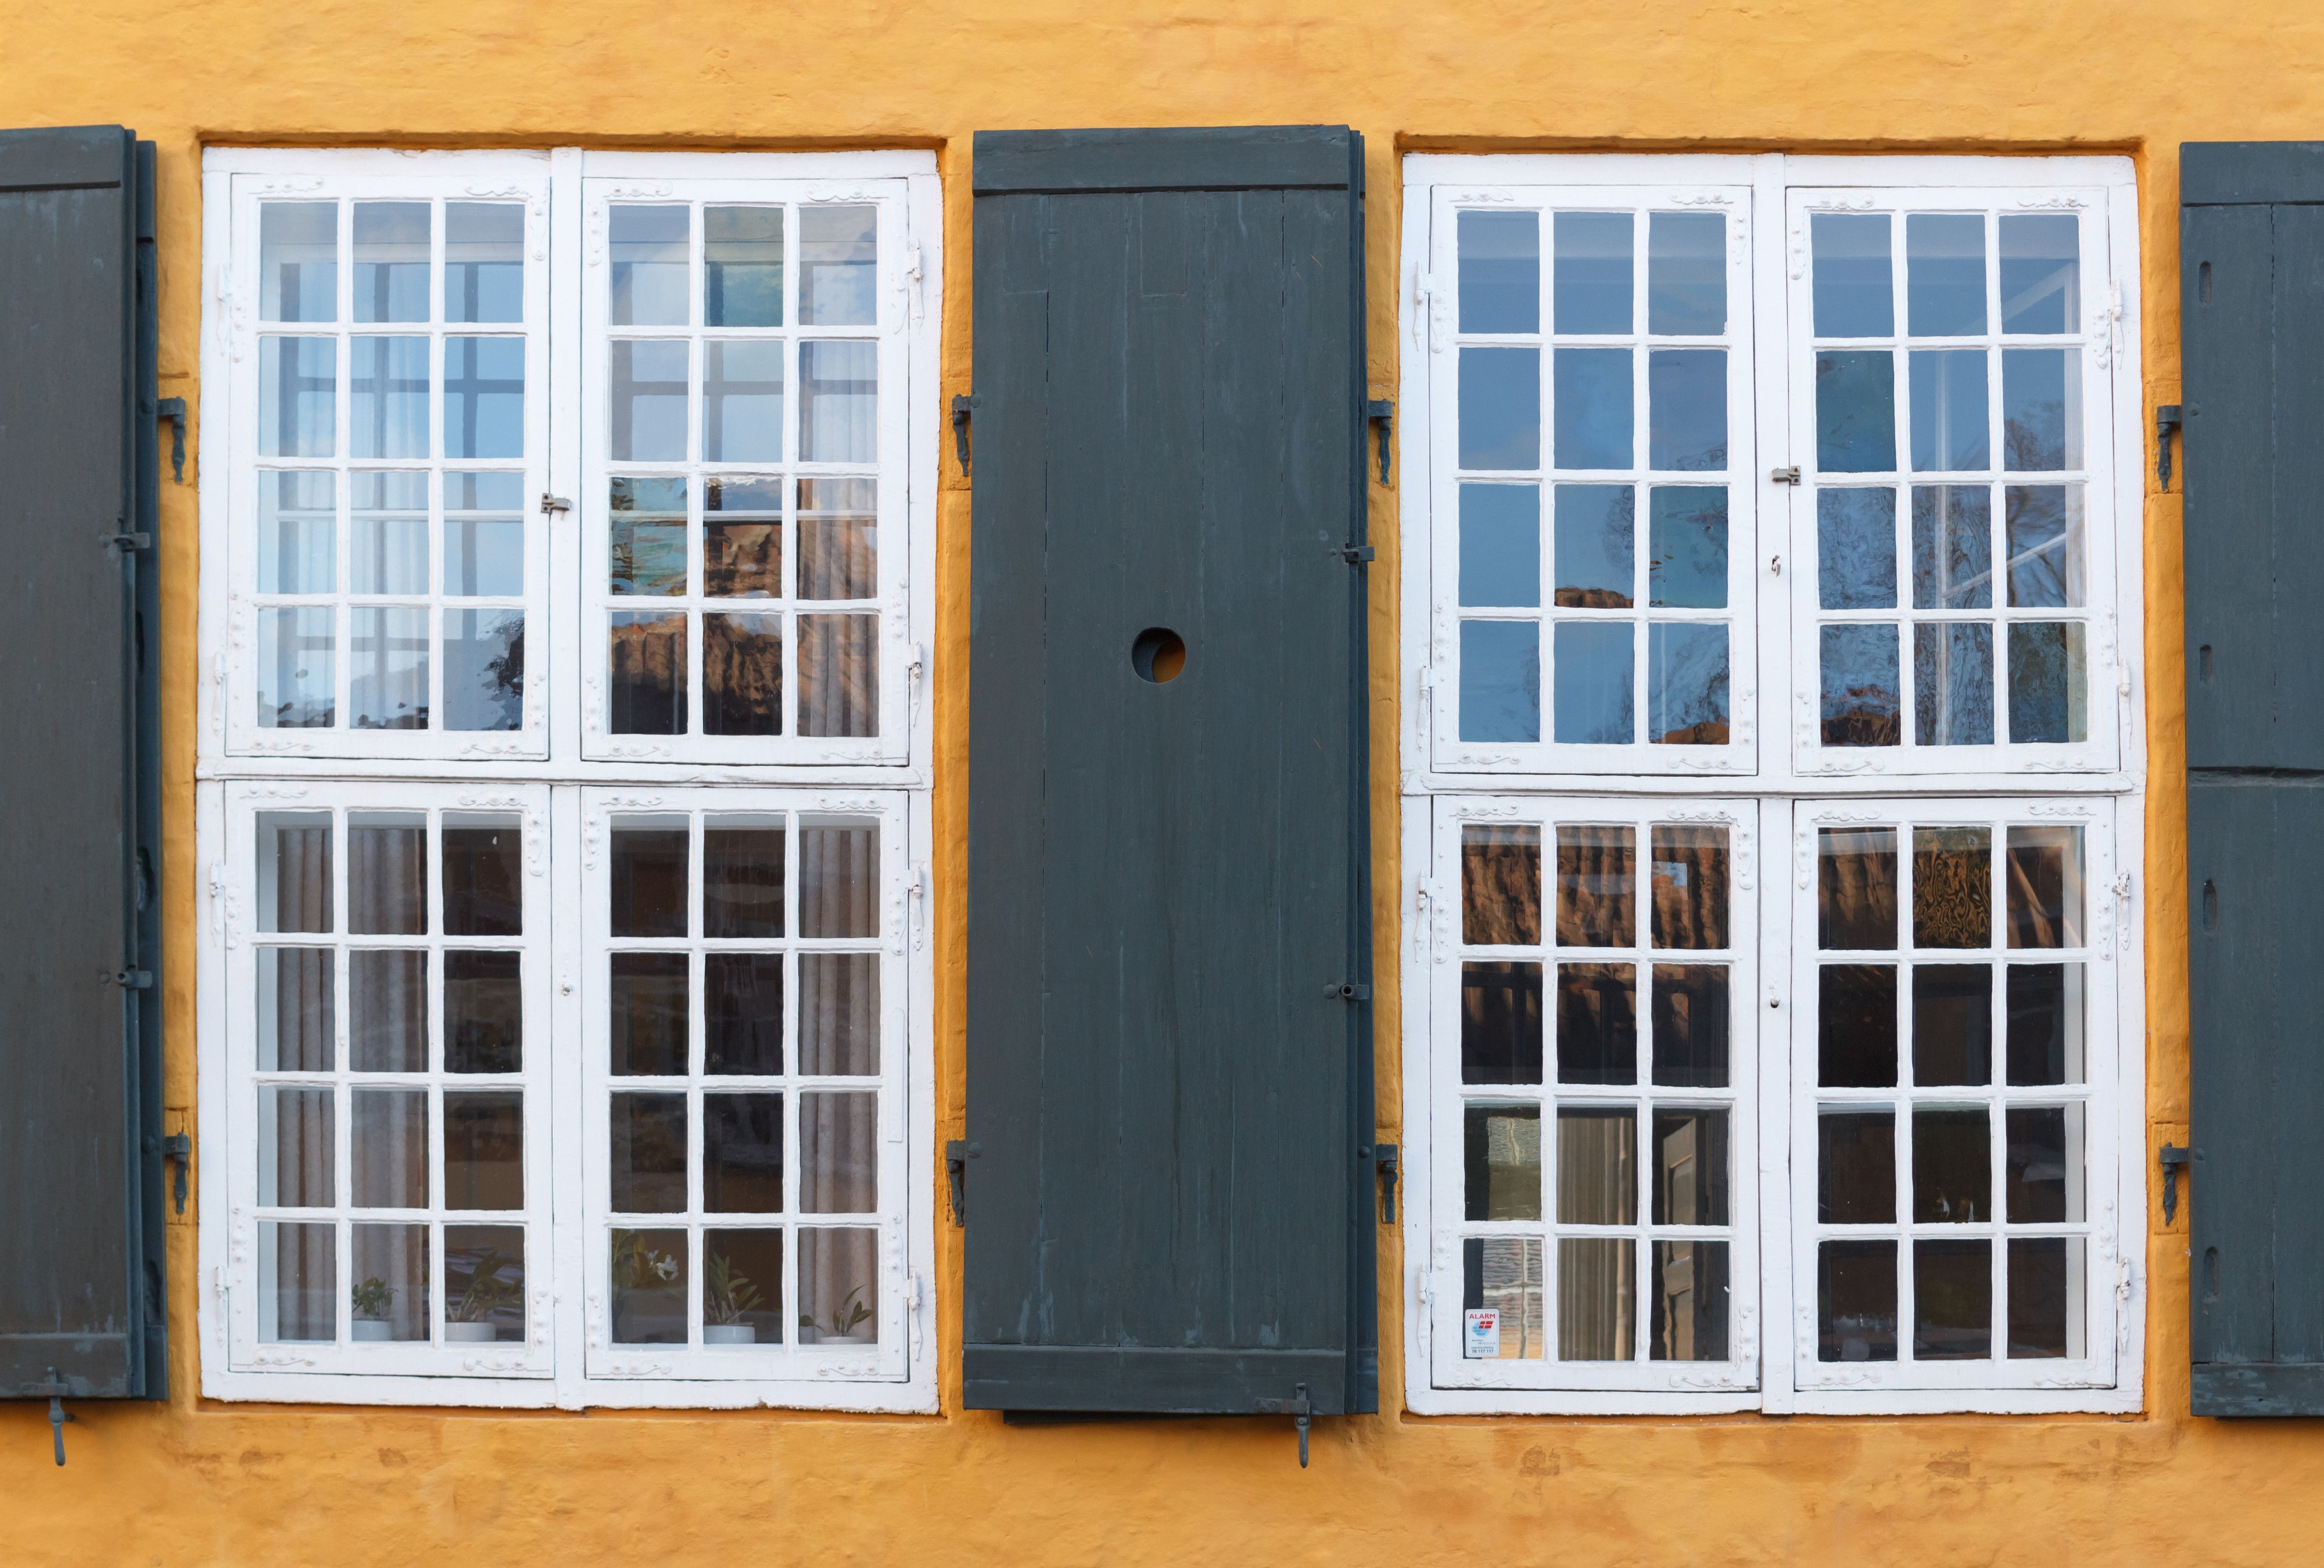 Windows facade Museum of Contemporary Art Roskilde 2015-03-30-4778